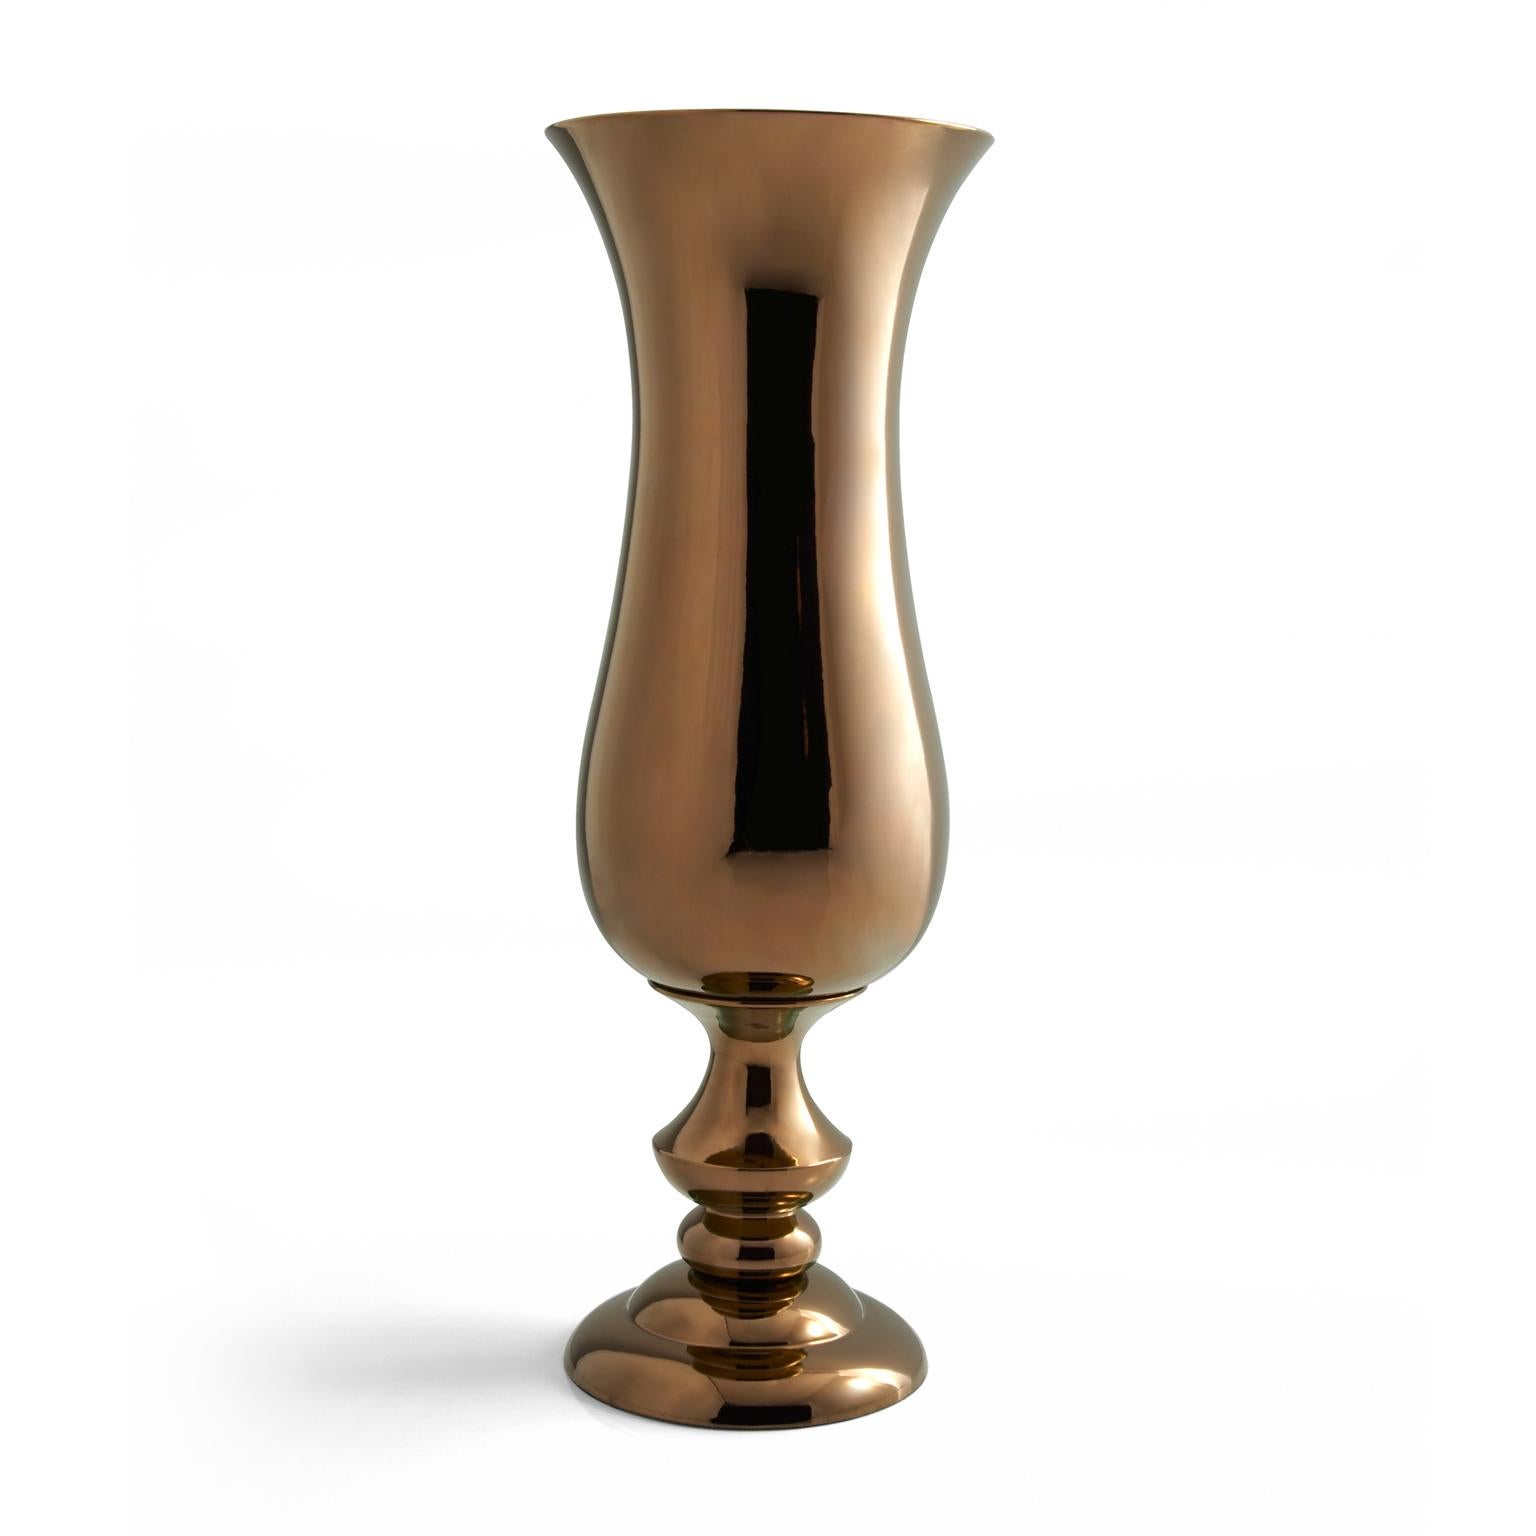 Ceramic vase handcrafted in bronze
DIANA - code CP003, measures: 
height 130.0 cm., diameter 40.0 cm.